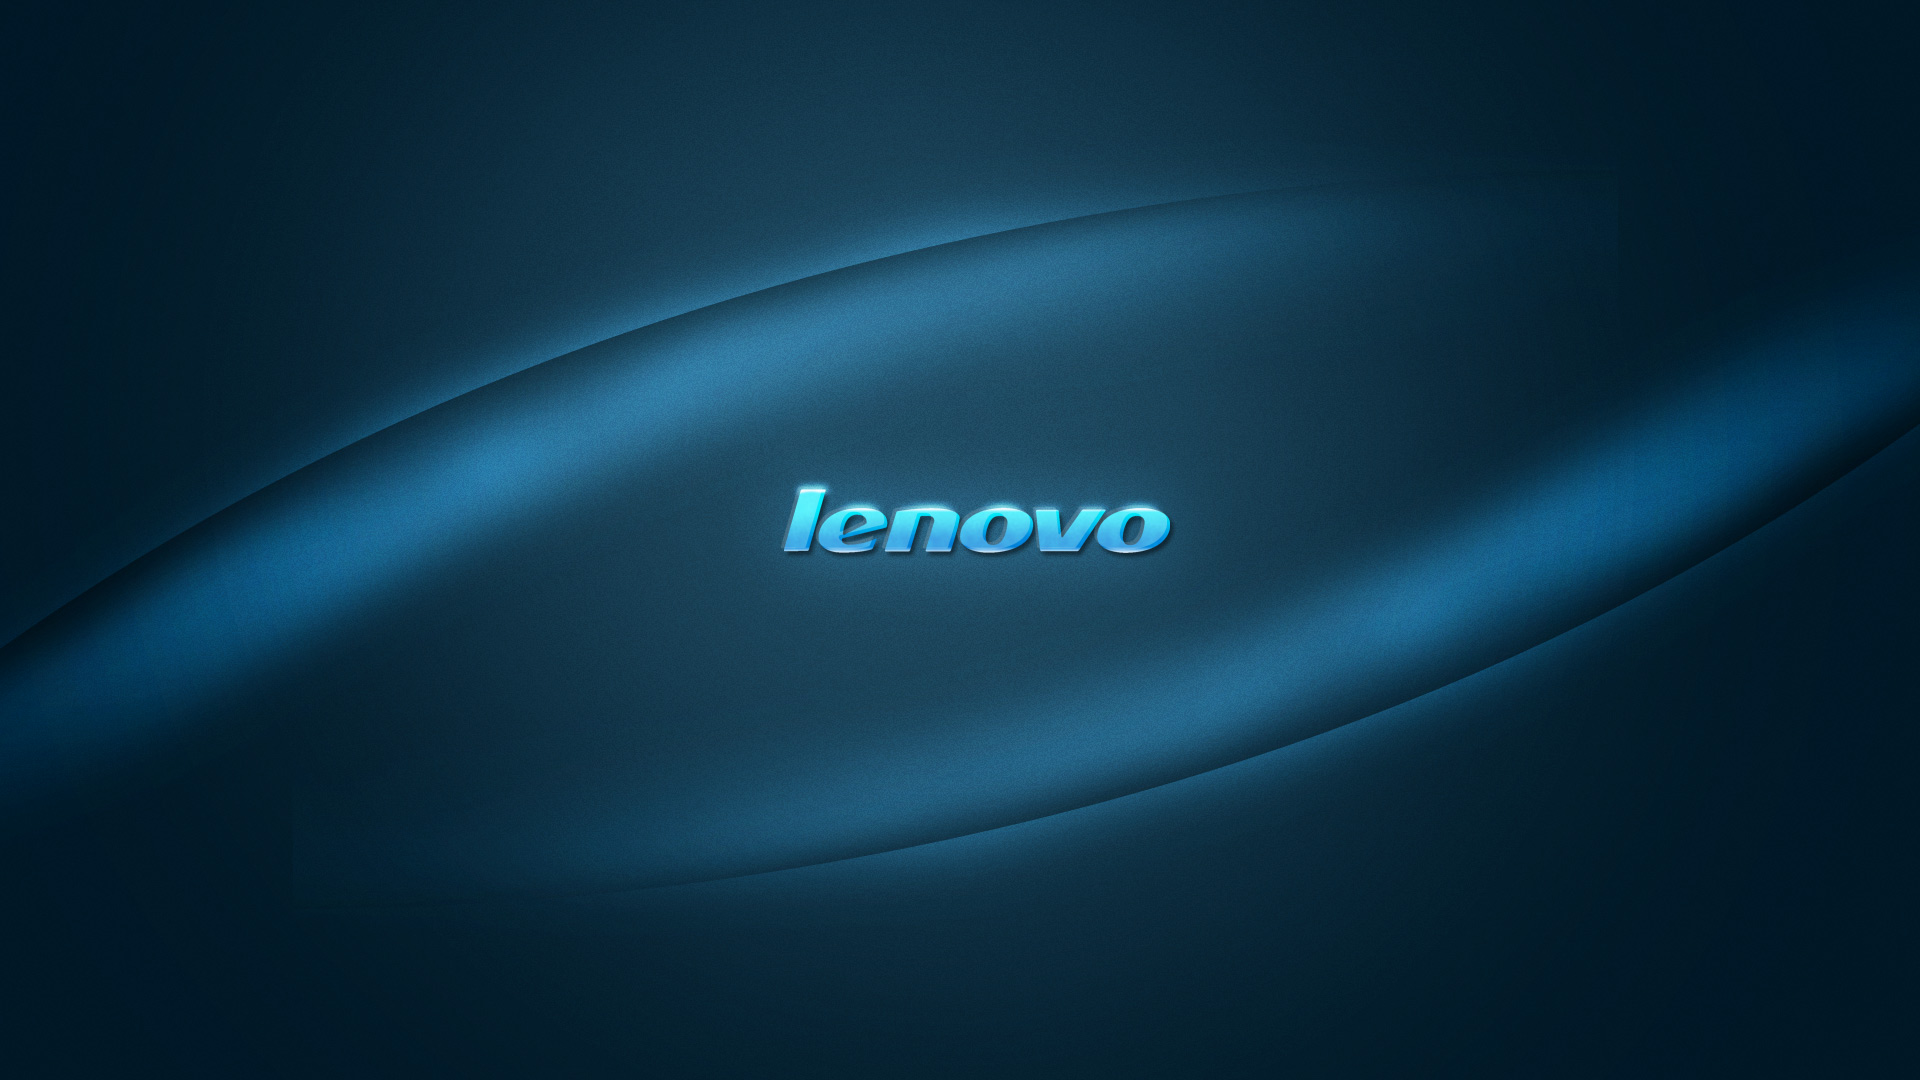 48+] Lenovo Wallpapers Free Download - WallpaperSafari